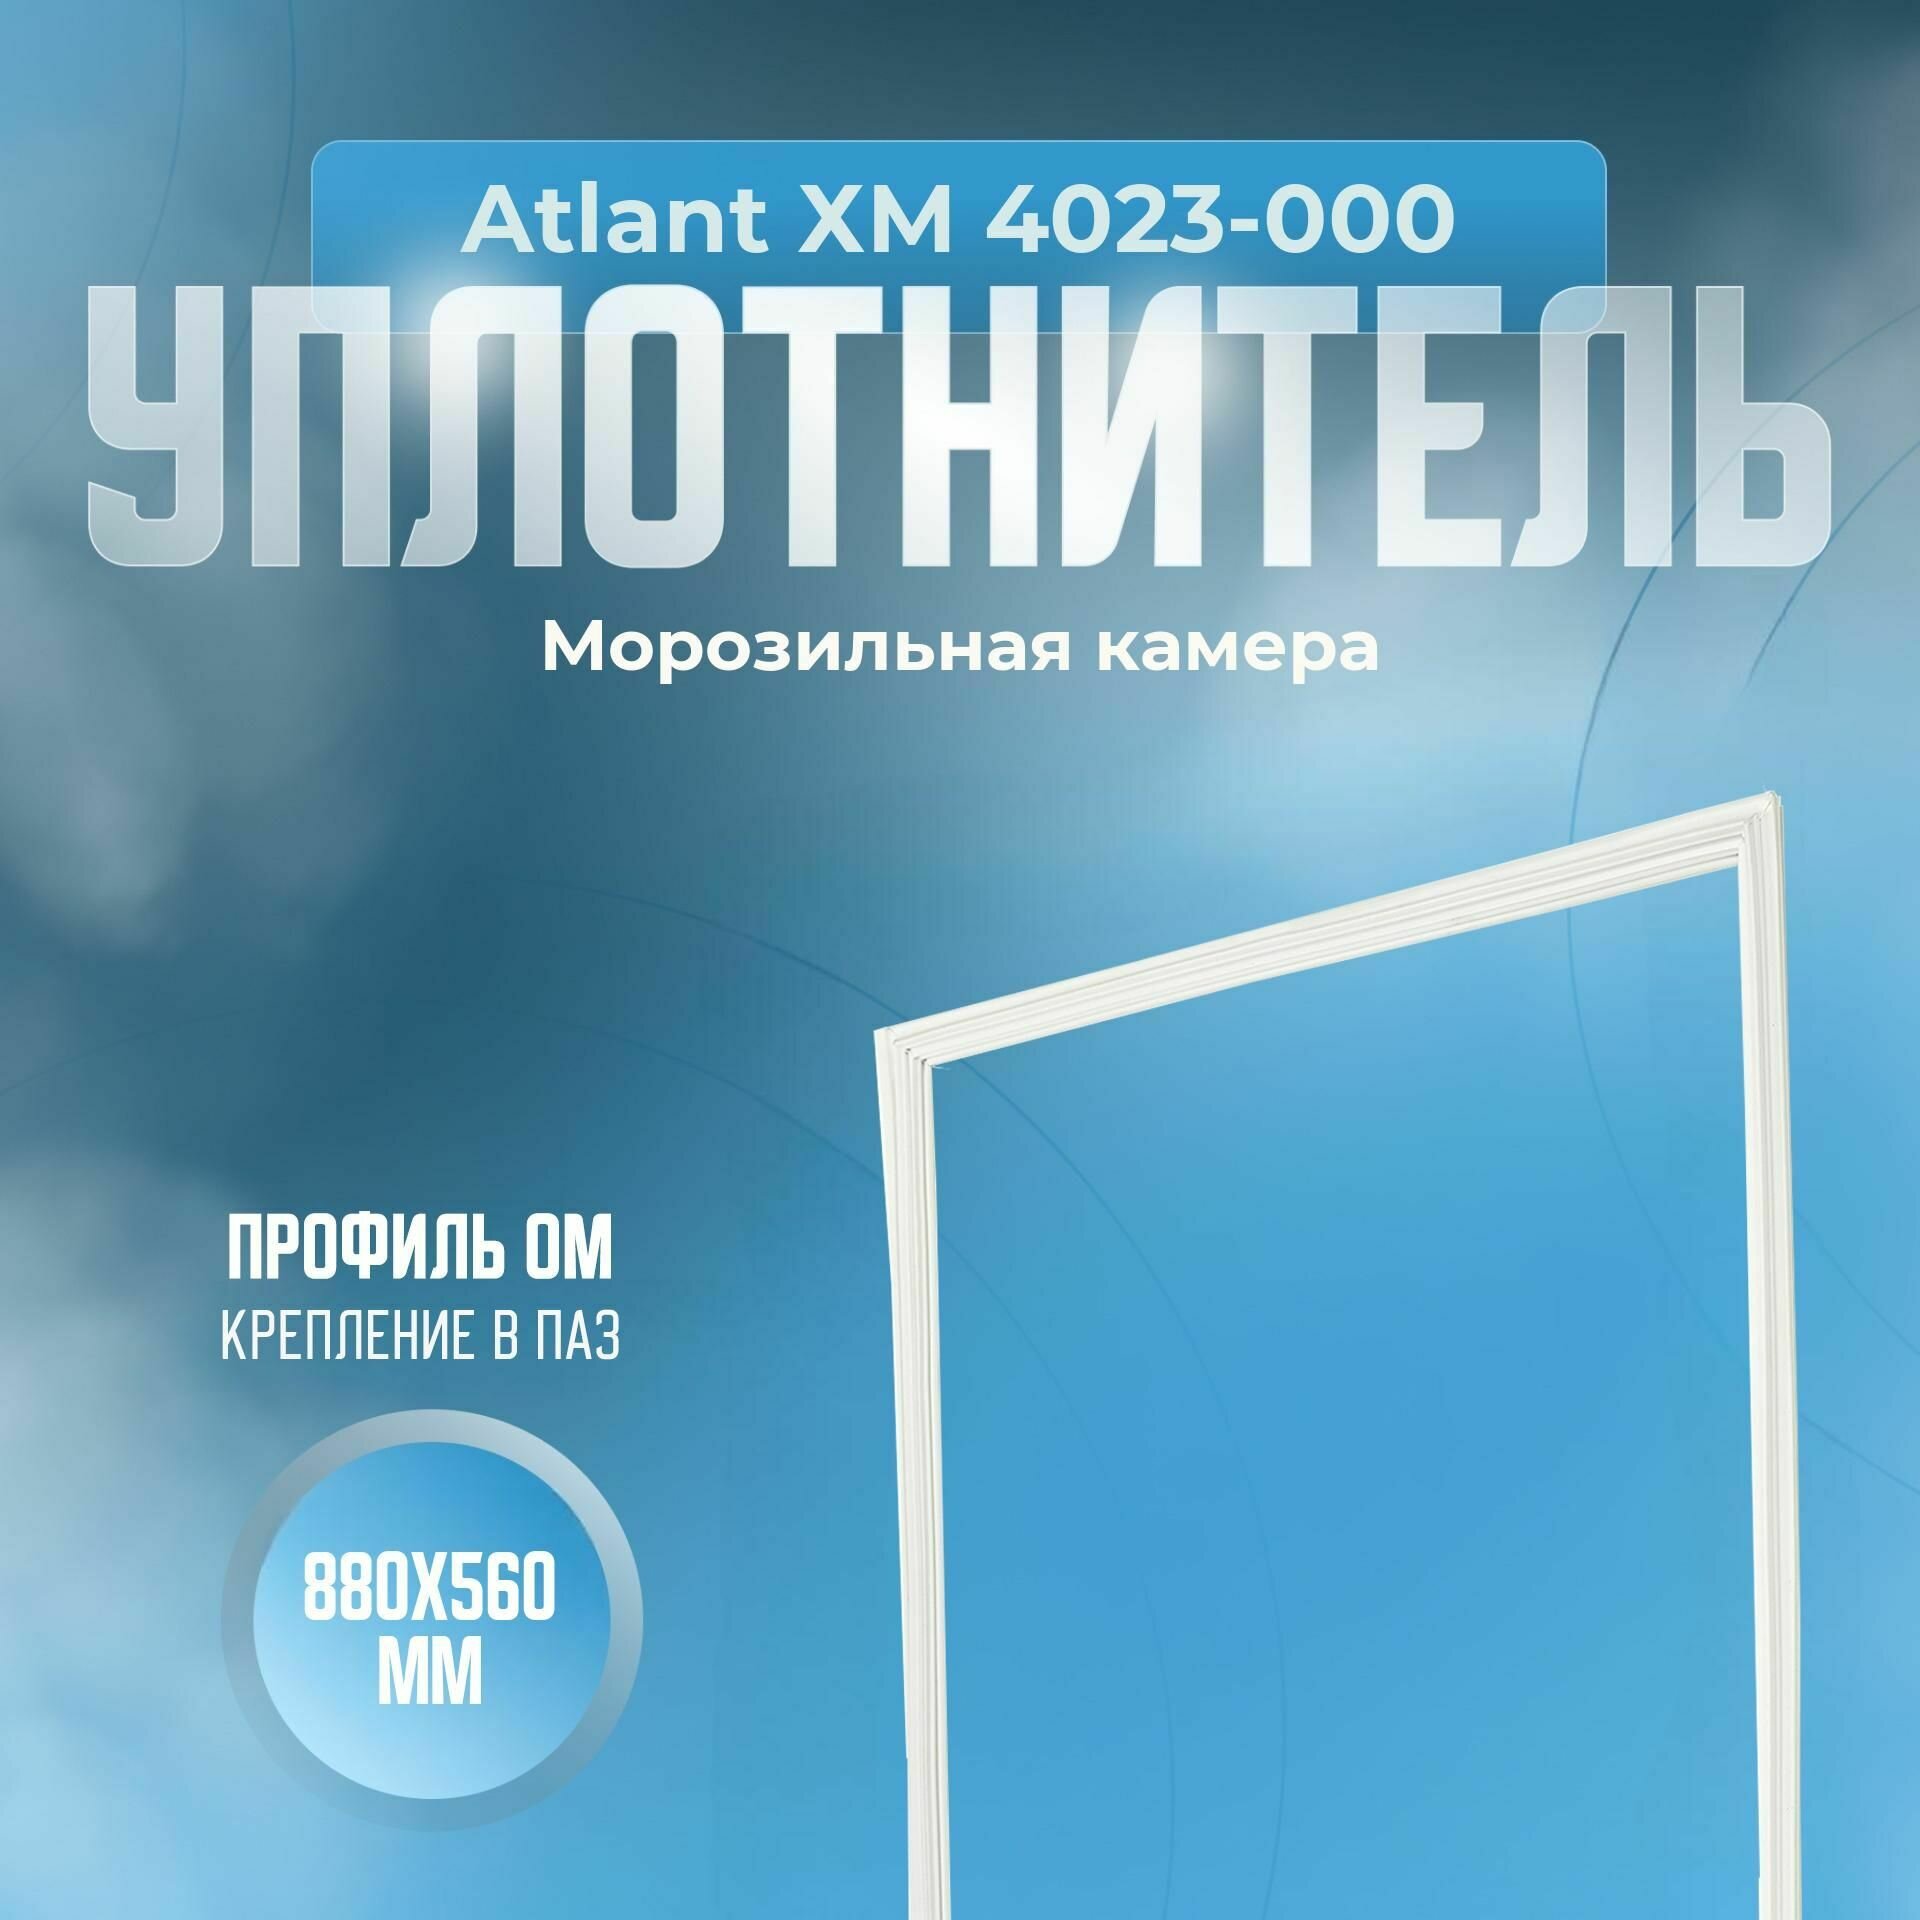 Уплотнитель Atlant ХМ 4023-000. м. к, Размер - 880х560 мм. ОМ